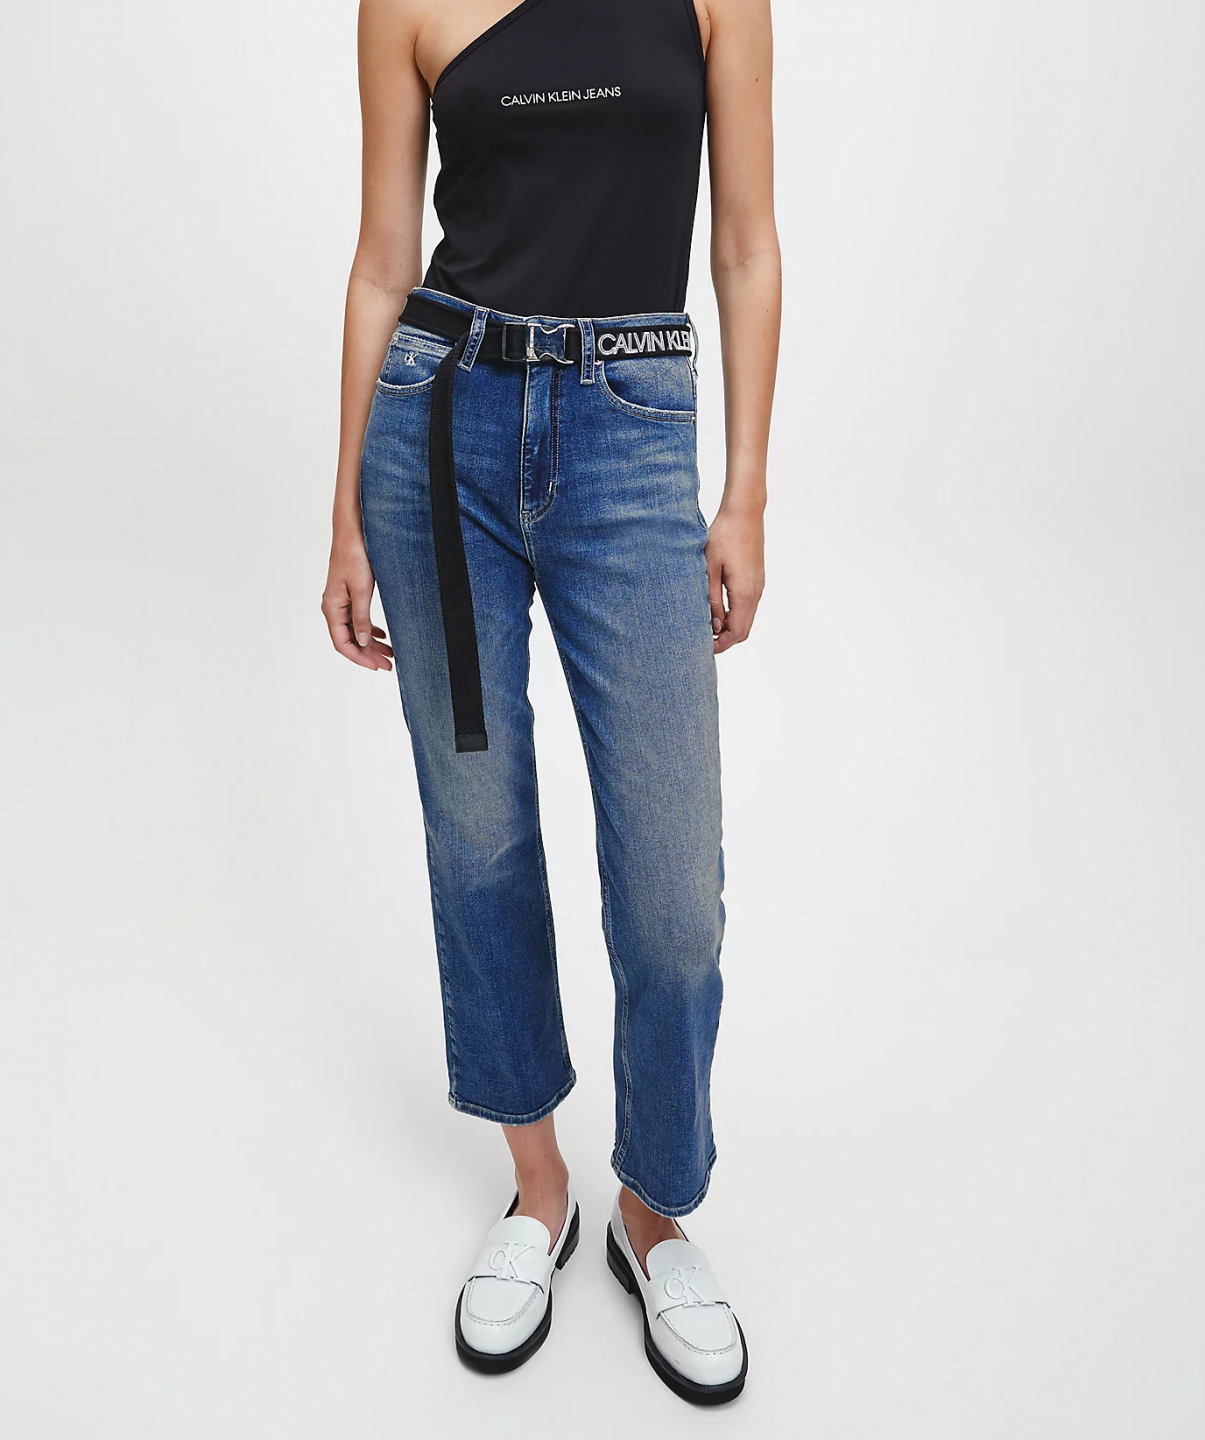 Calvin Klein dámské modré denim džíny HIGH RISE FLARE ANKLE 